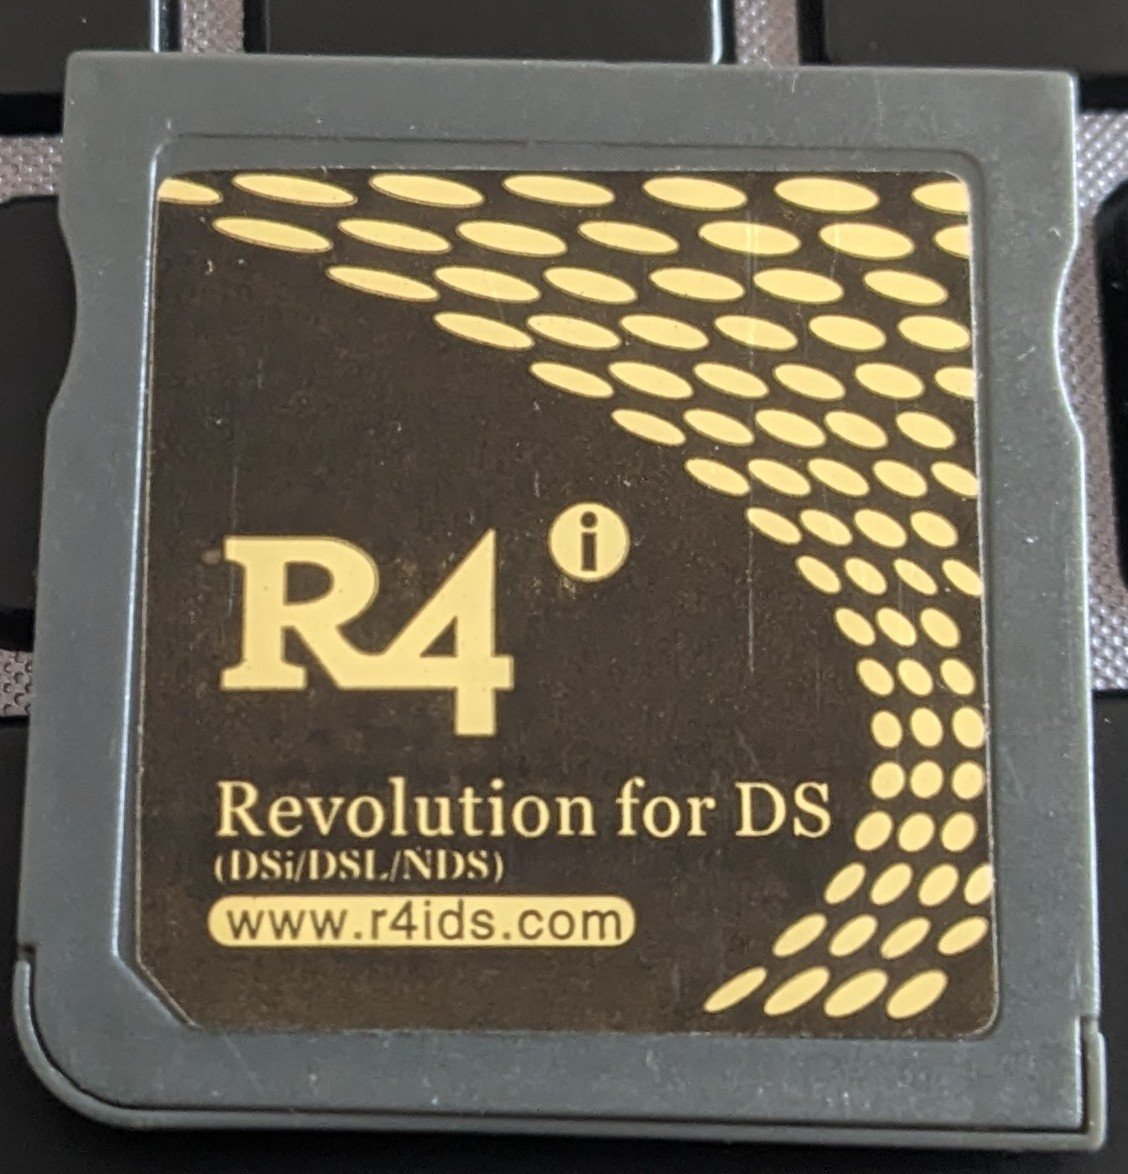 R4i revolution v1.4 | GBAtemp.net - The Independent Video Game Community